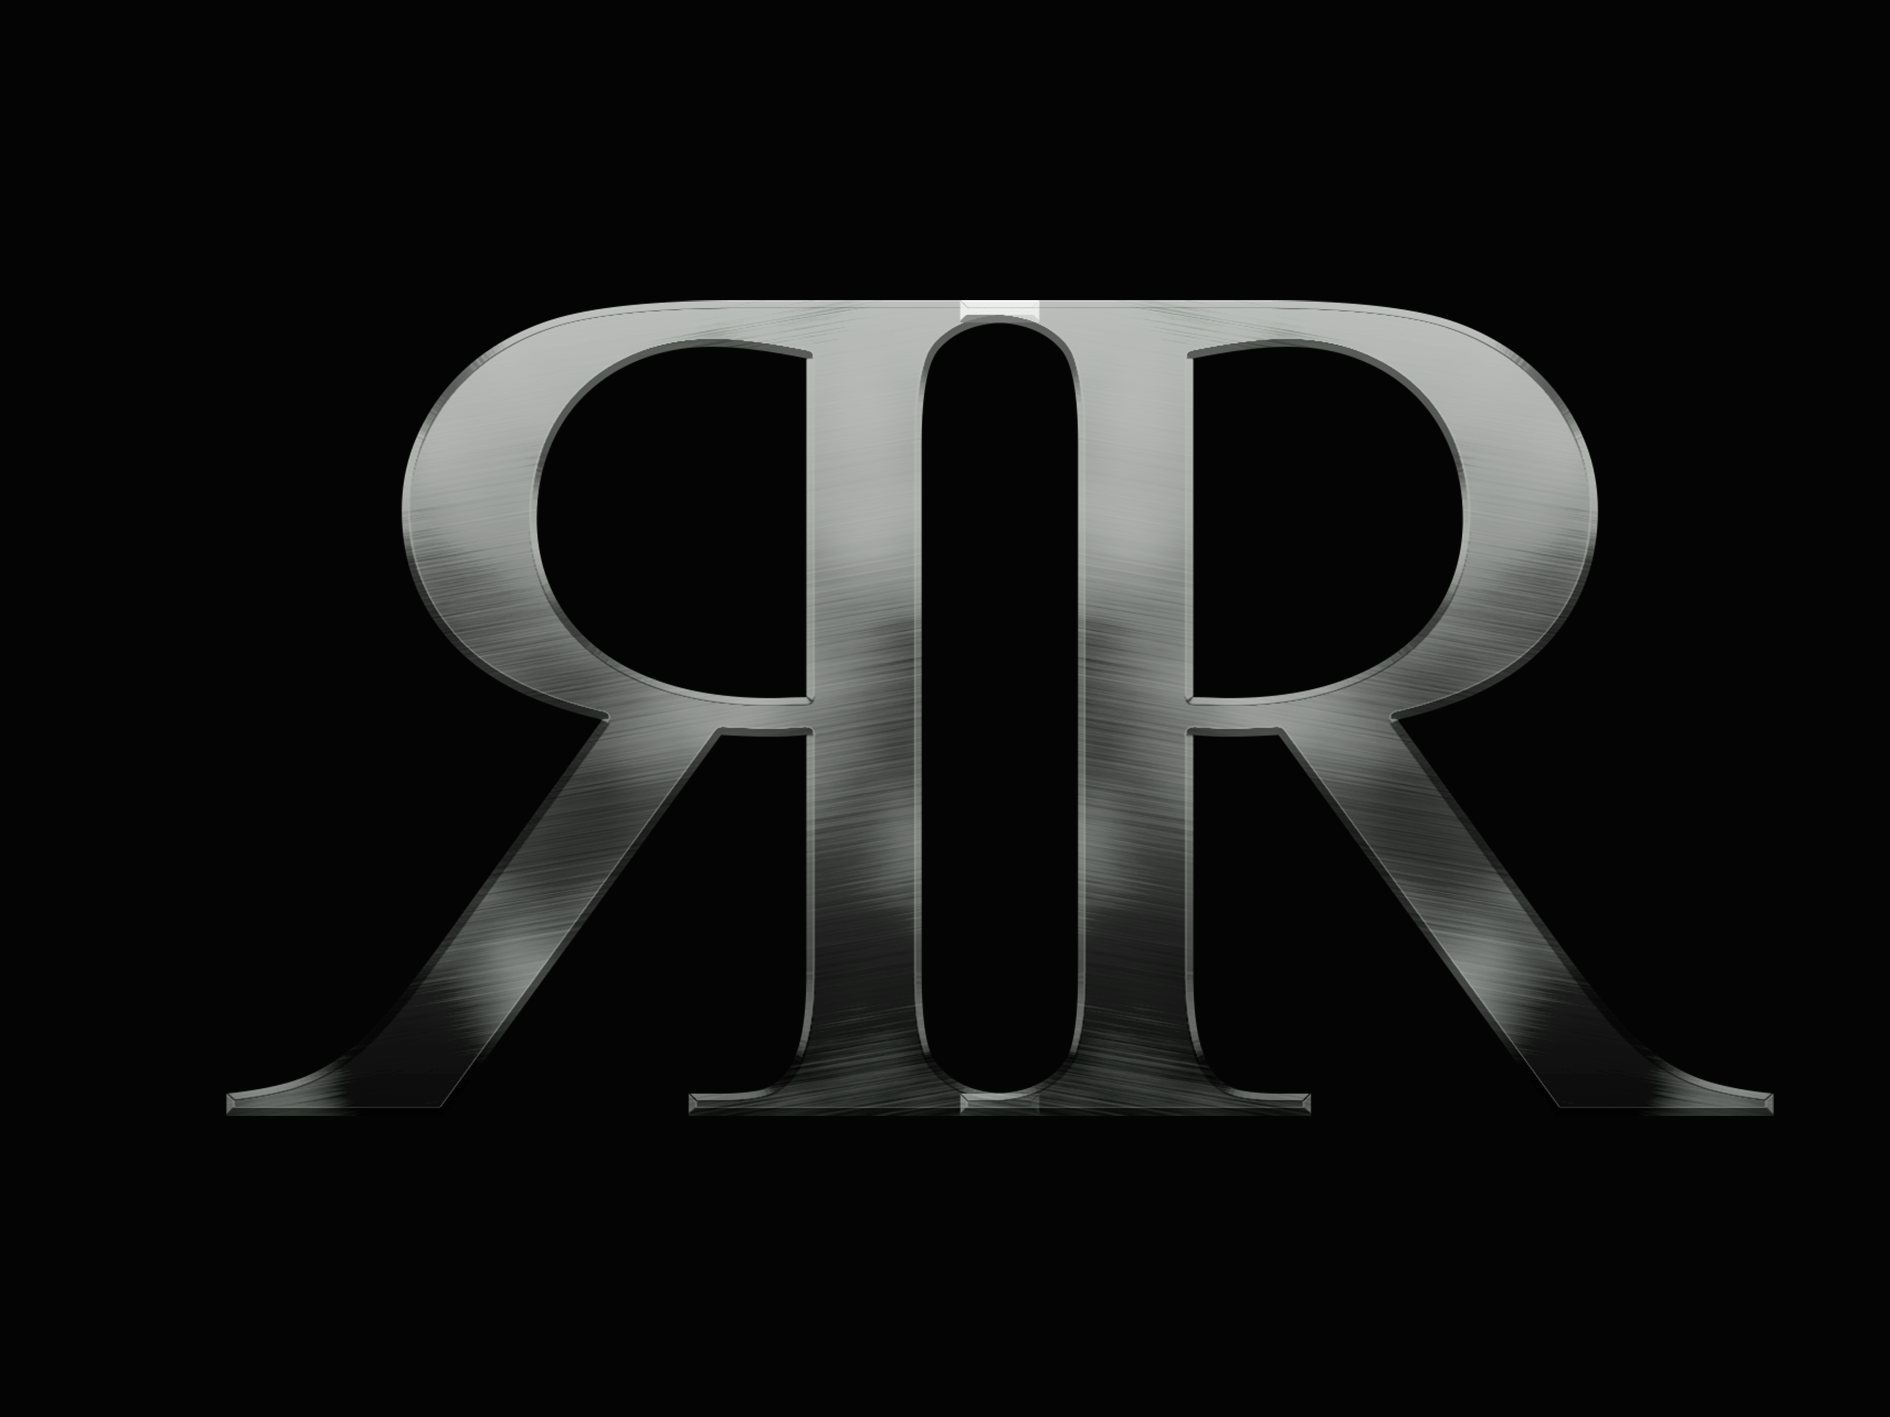 RR Logo - File:Logo imagen RR.png - Wikimedia Commons